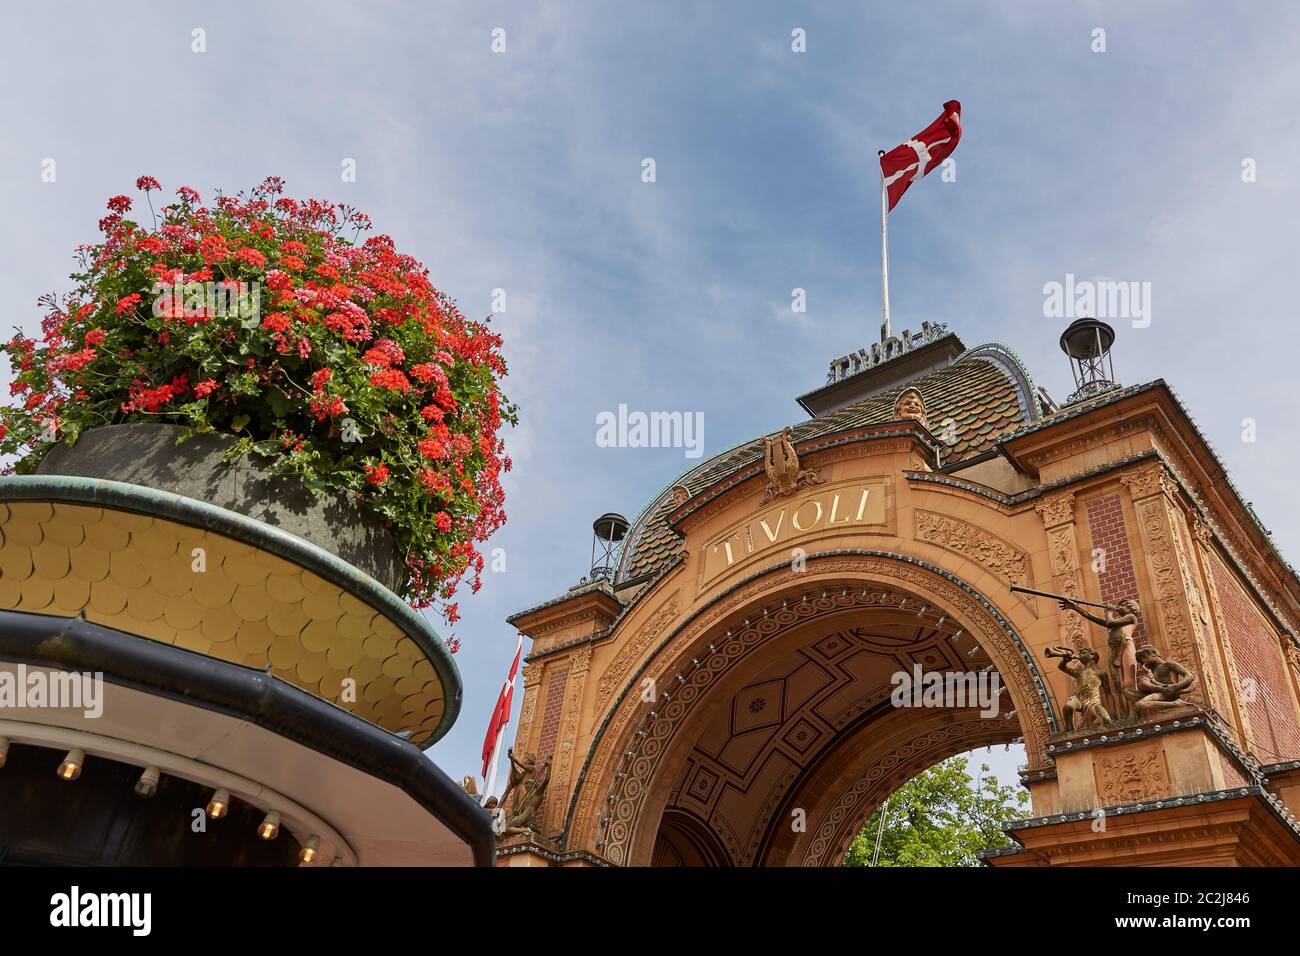 The main entrance gate into Tivoli amusement park in Copenhagen, Denmark Stock Photo